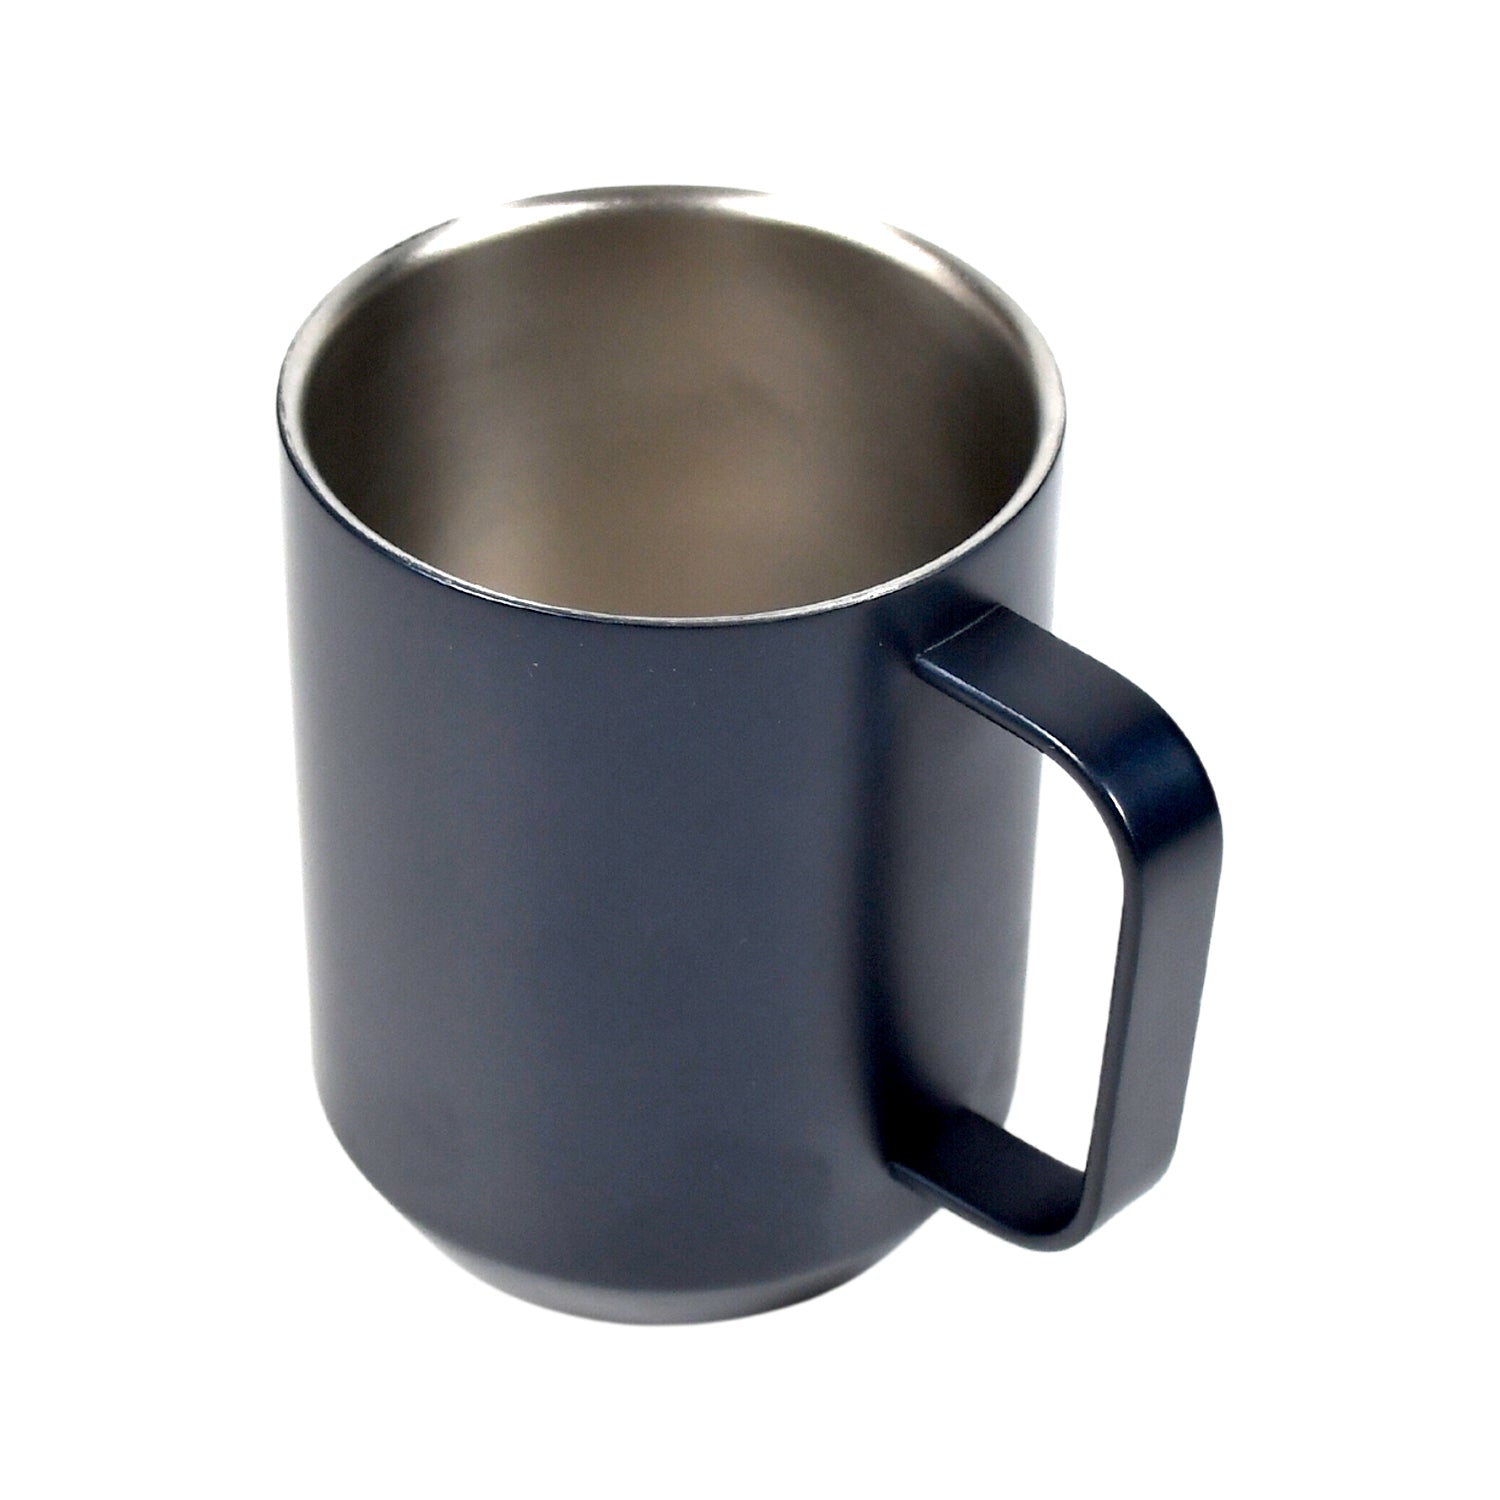 7181 STEEL COFFEE MUG PREMIUM CUP FOR COFFEE TEA COCOA, CAMPING MUGS WITH HANDLE, PORTABLE & EASY CLEAN DeoDap